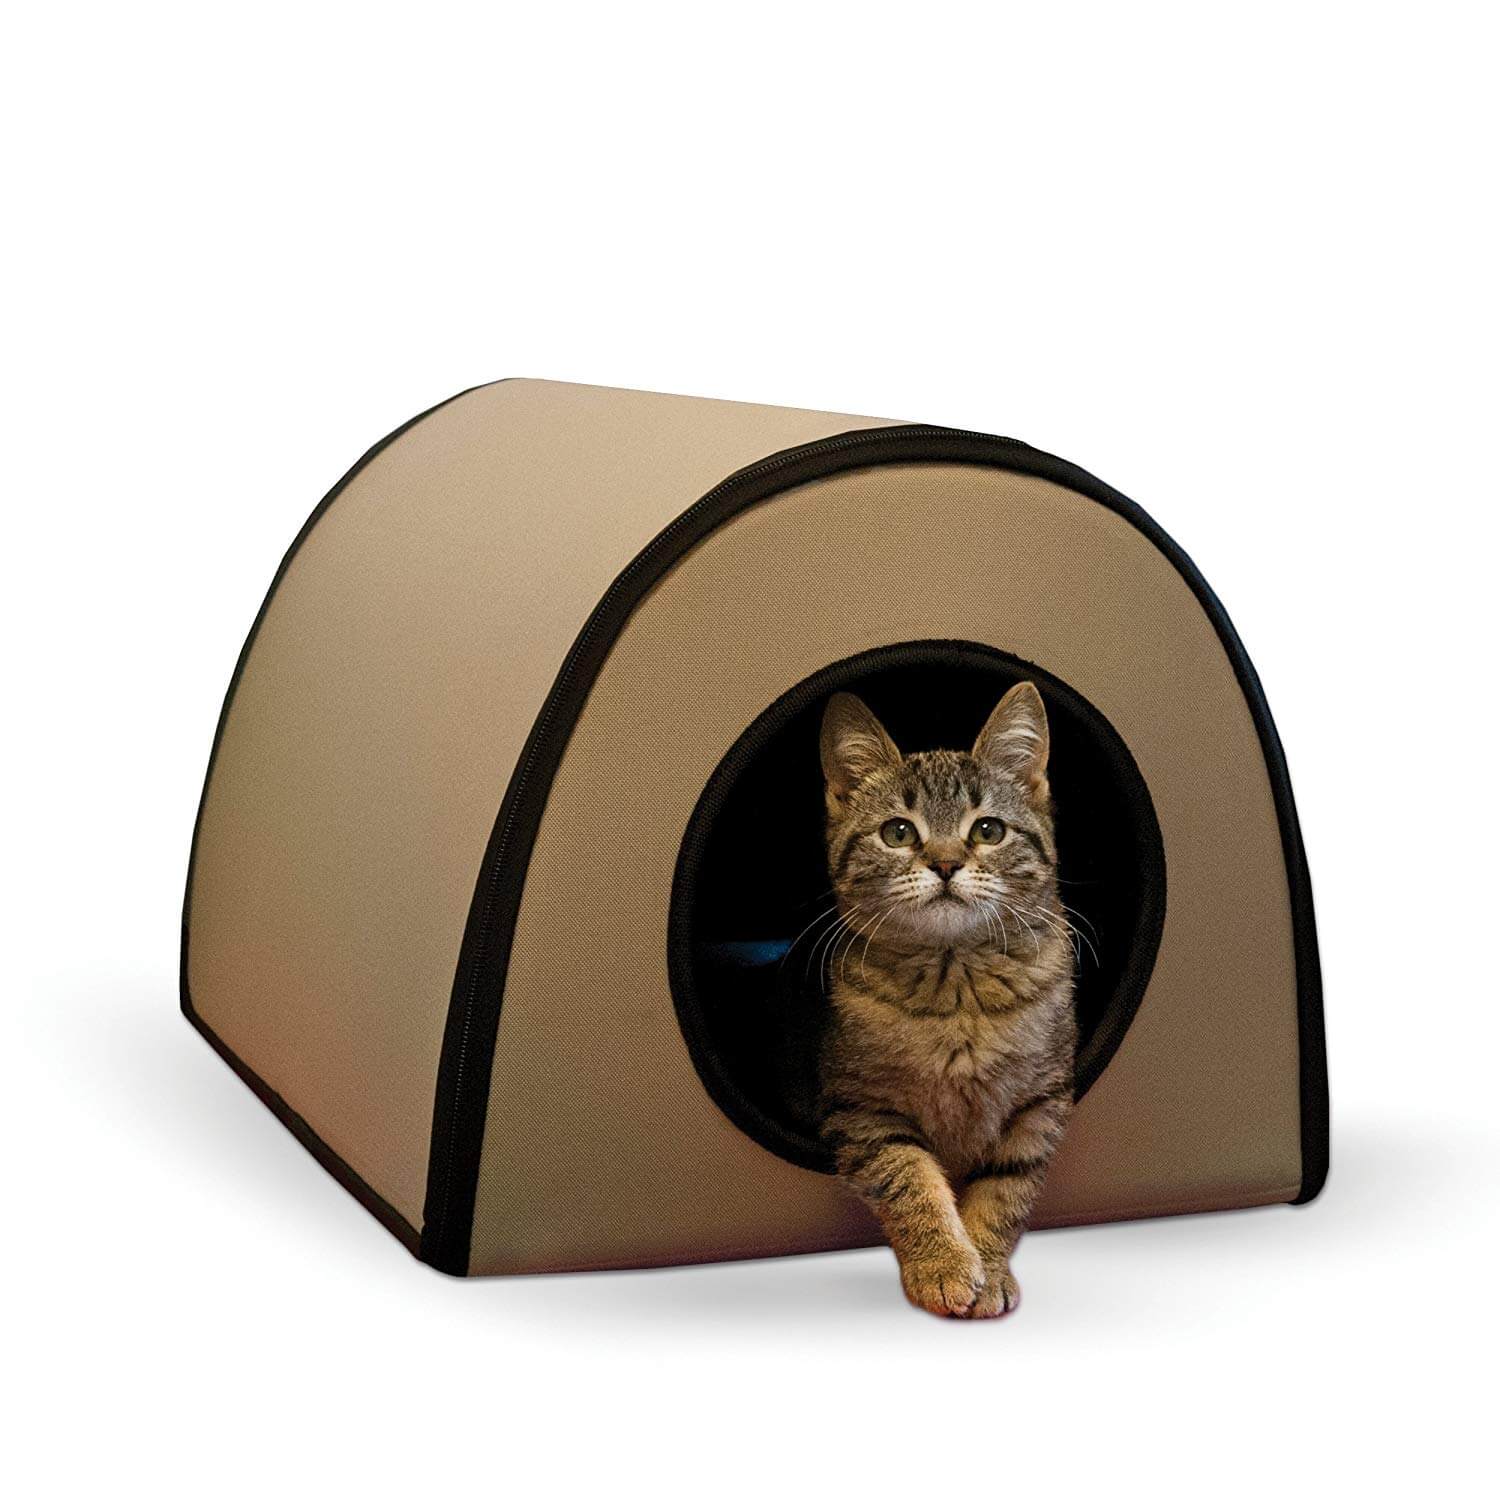 indoor heated cat house